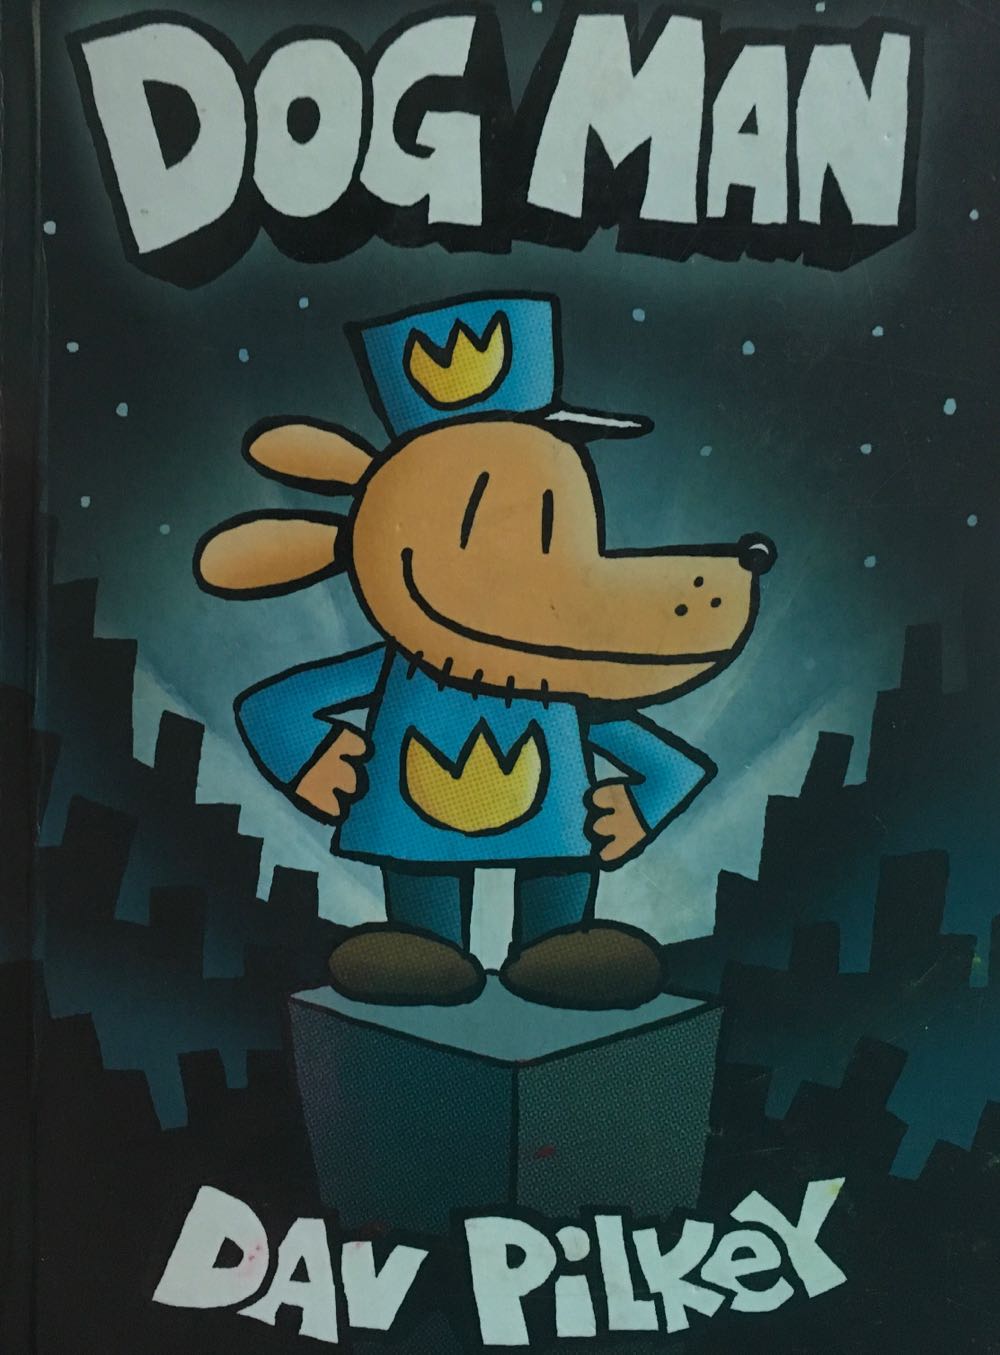 Dog Man #1 - Dav Pilkey (Graphix - Hardcover) book collectible [Barcode 9780545581608] - Main Image 1